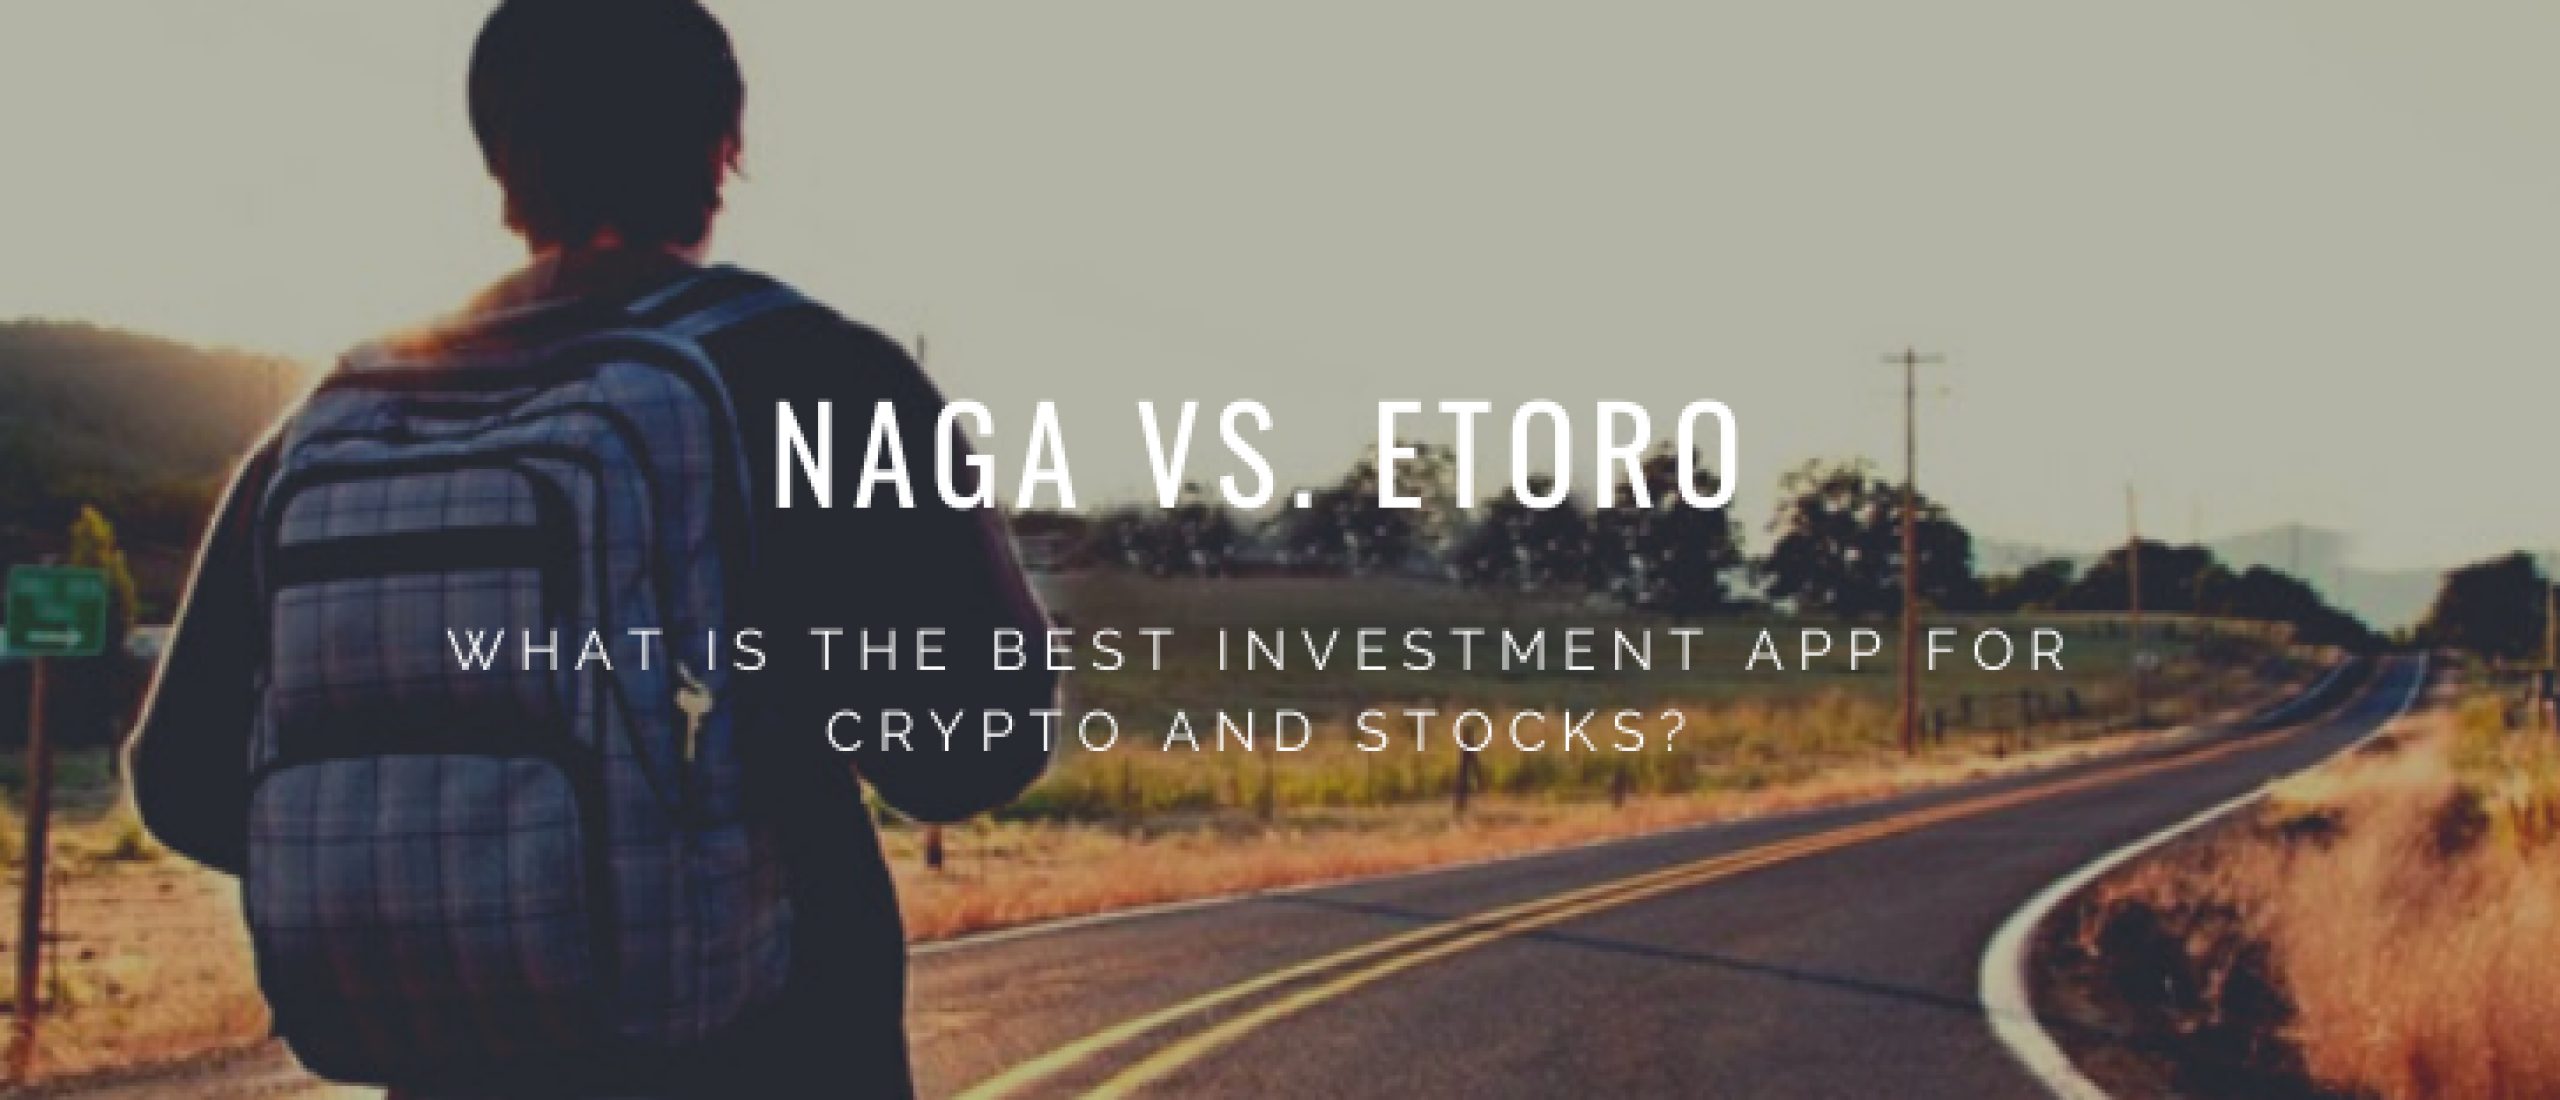 eToro vs. NAGA Comparison: Best App for Crypto and Stock Investing